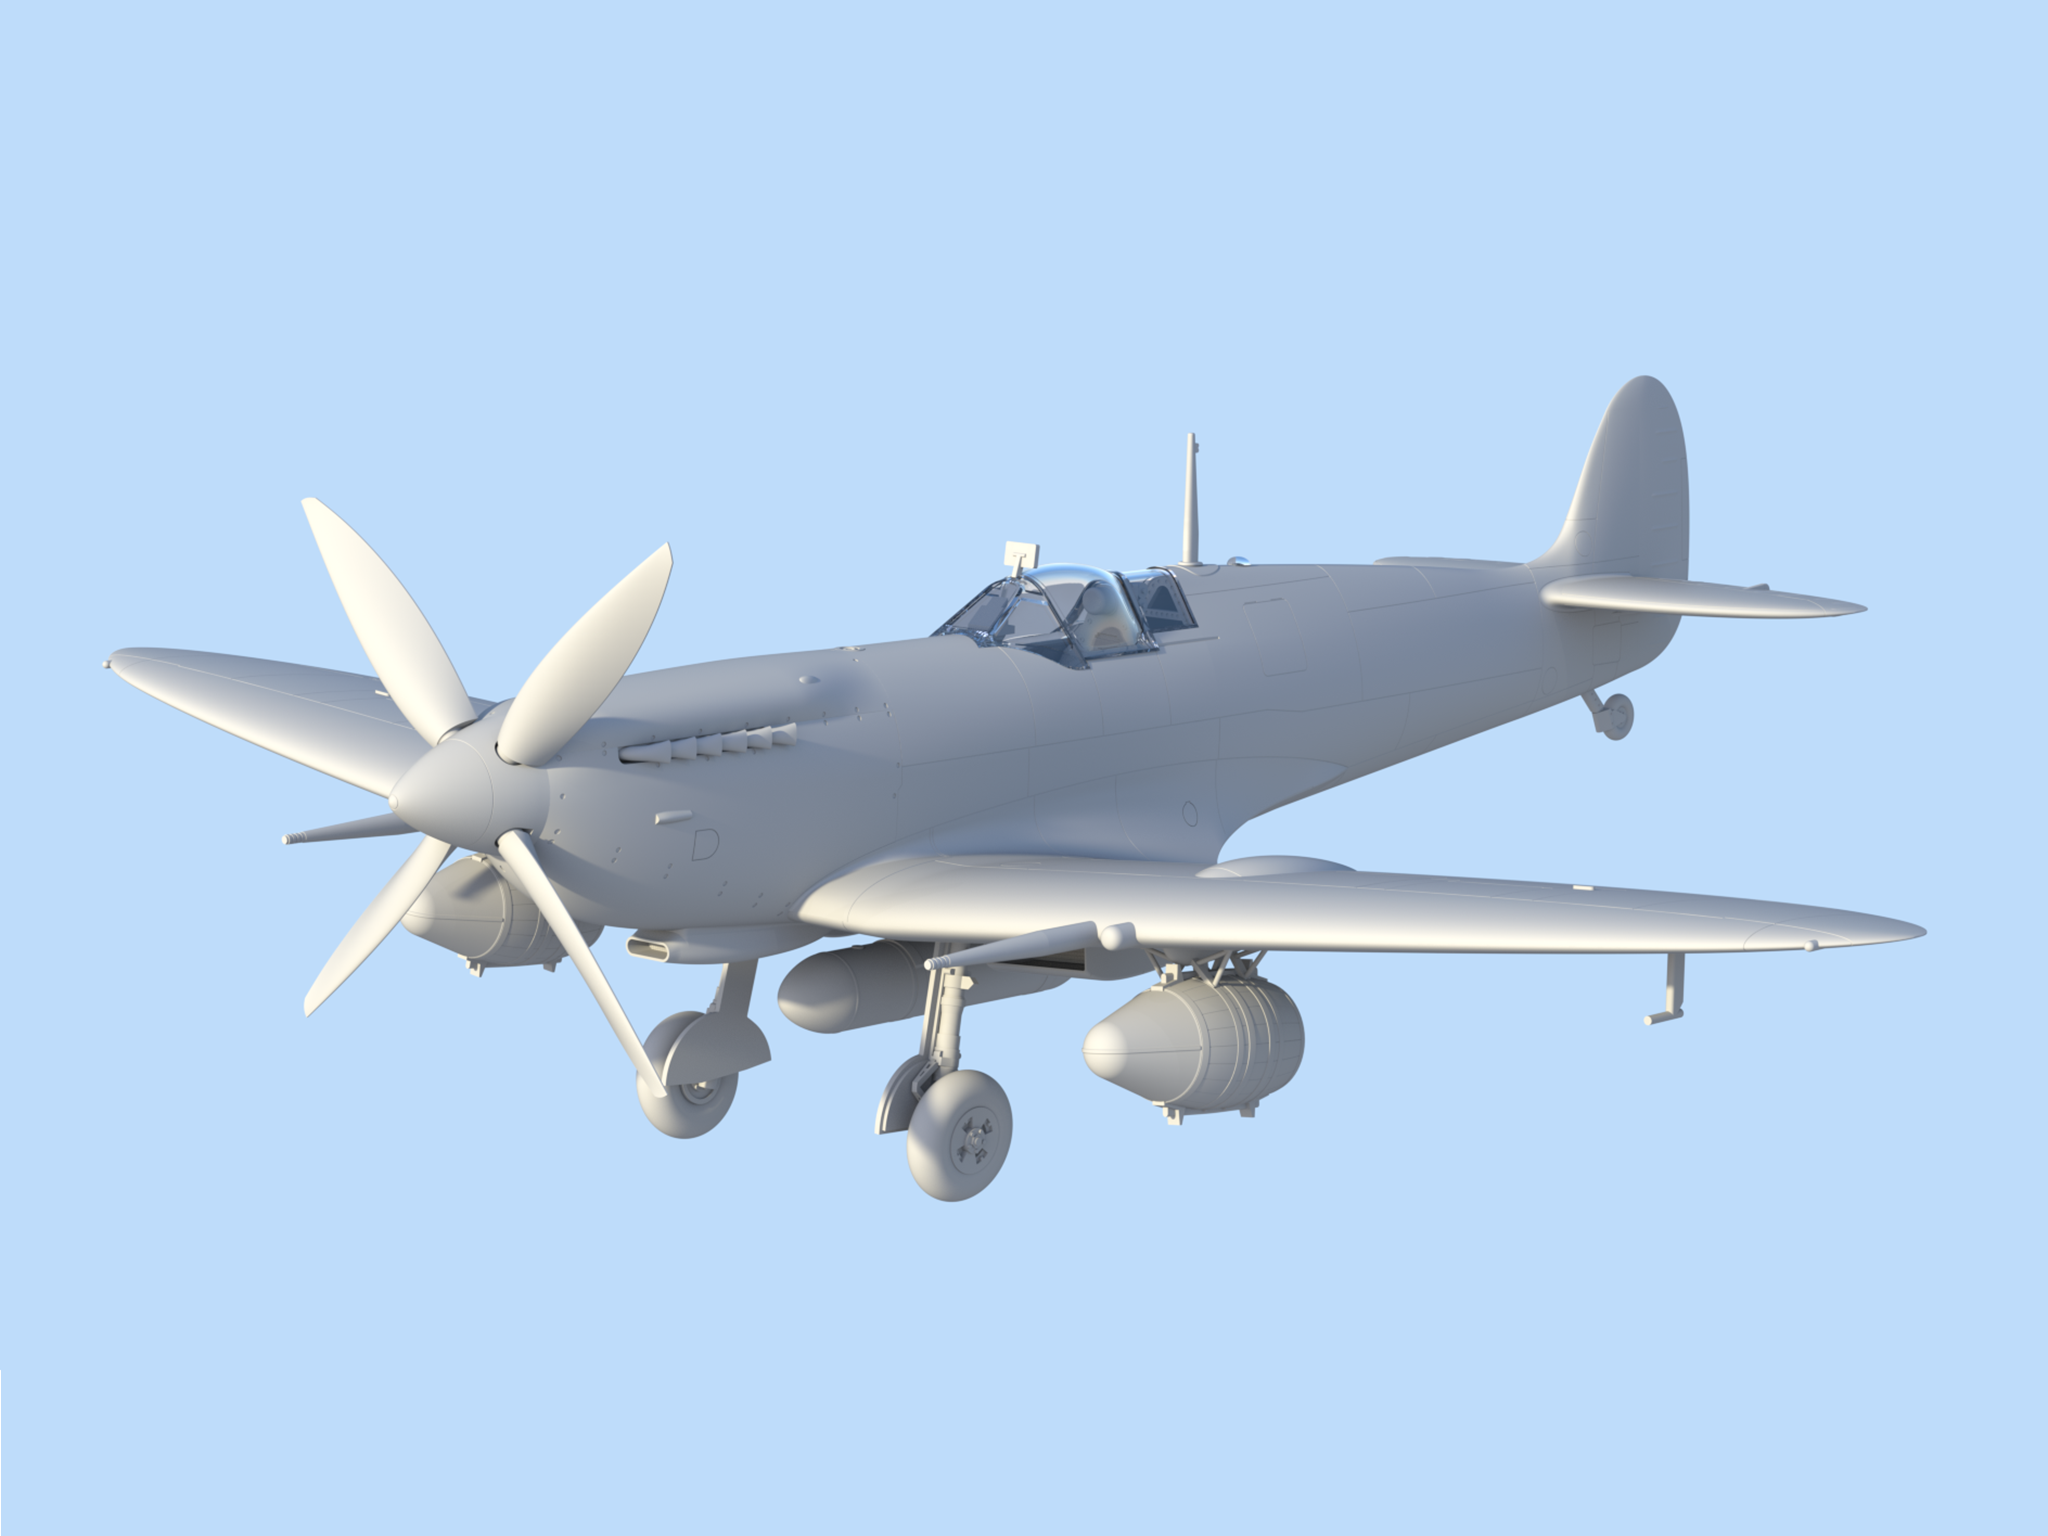 ICM 48060 WWII British Fighter  Spitfire Mk.IXC "Beer Delivery" 1/48 